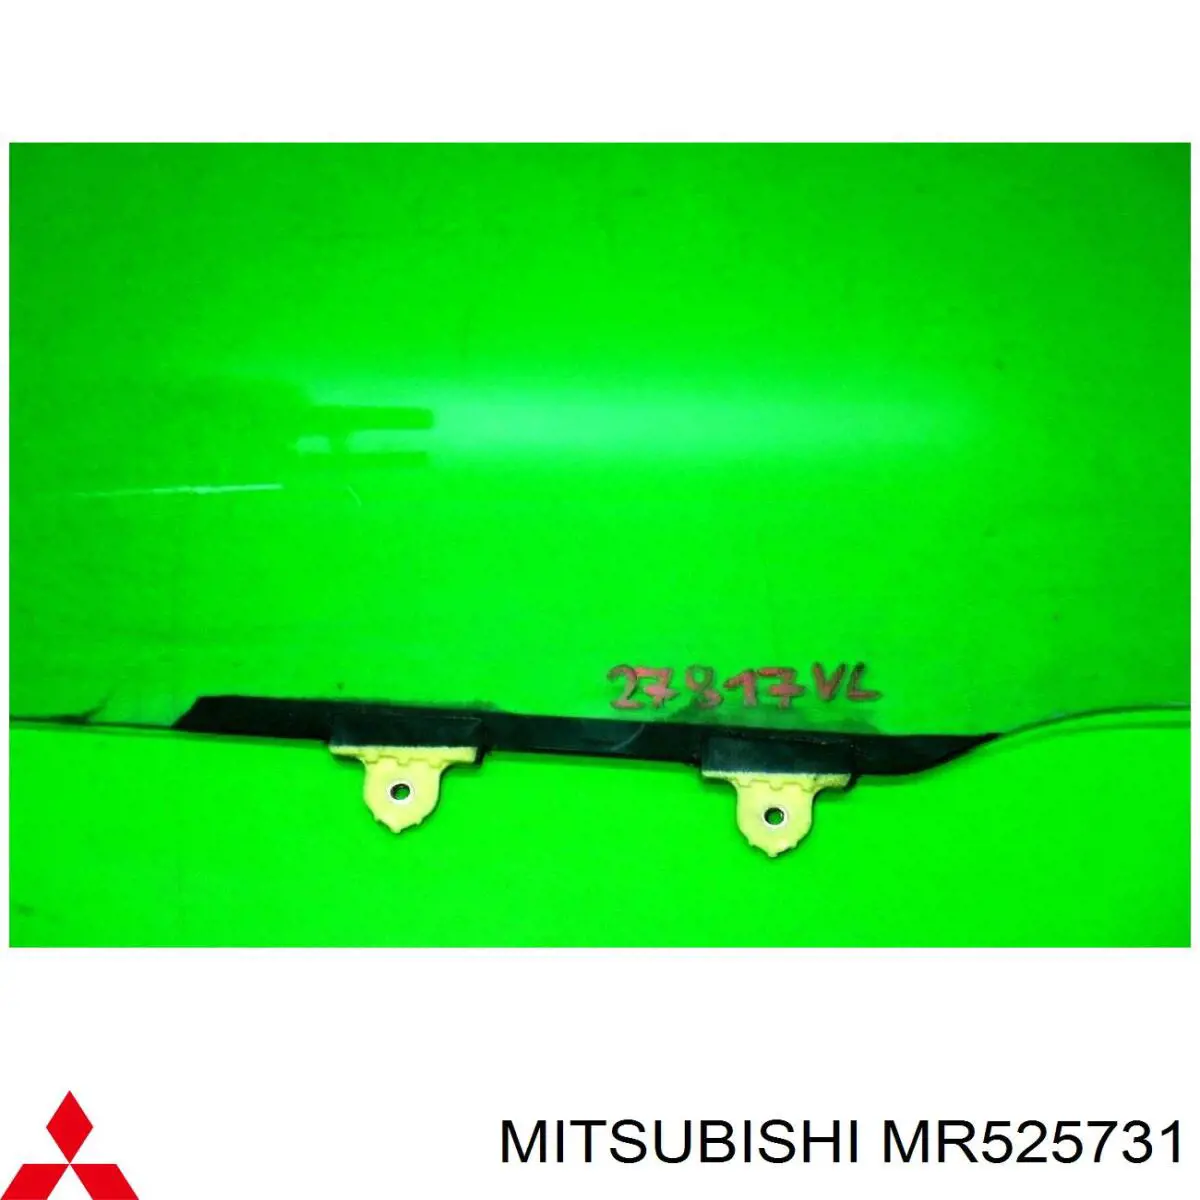 MR525731 Mitsubishi luna delantera derecha